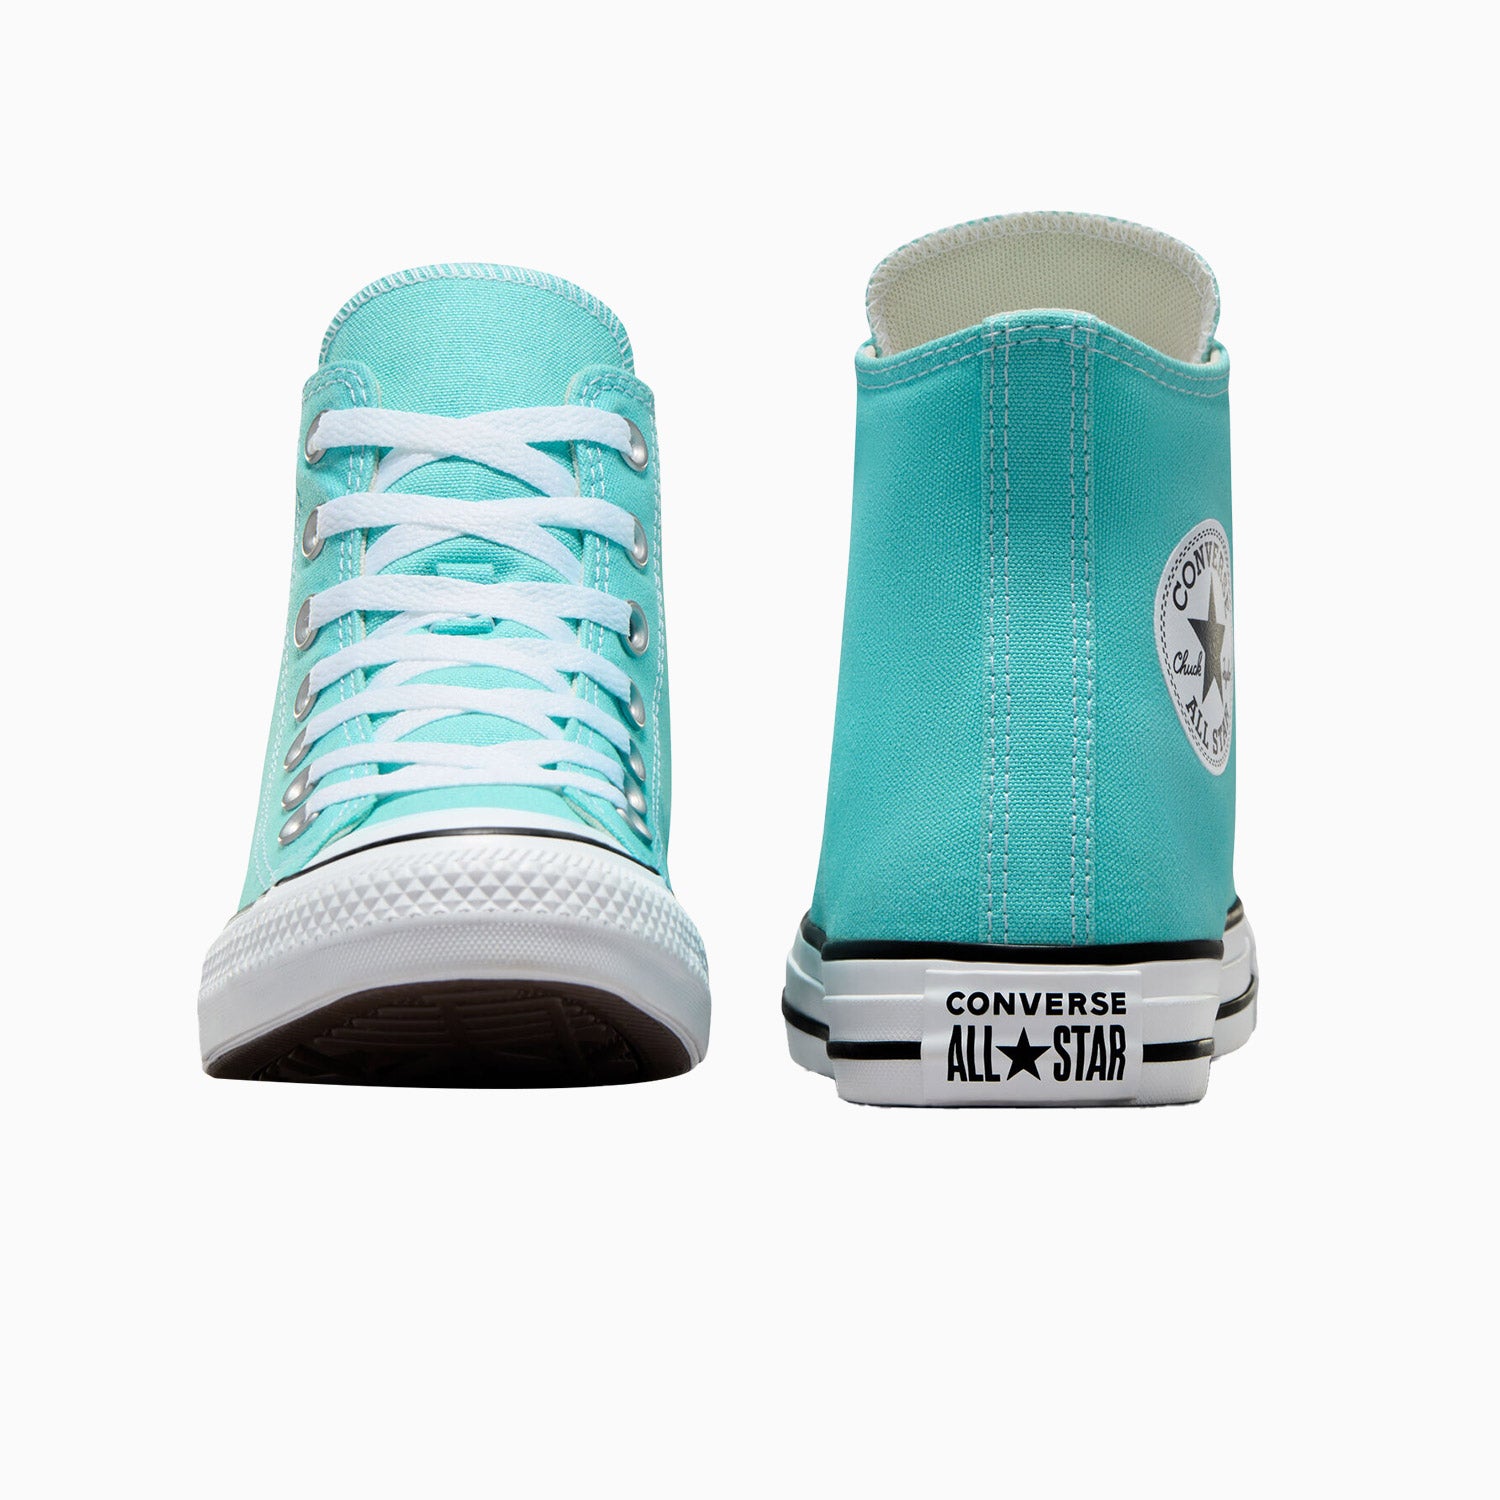 converse-chuck-taylor-all-star-high-shoes-a06562f